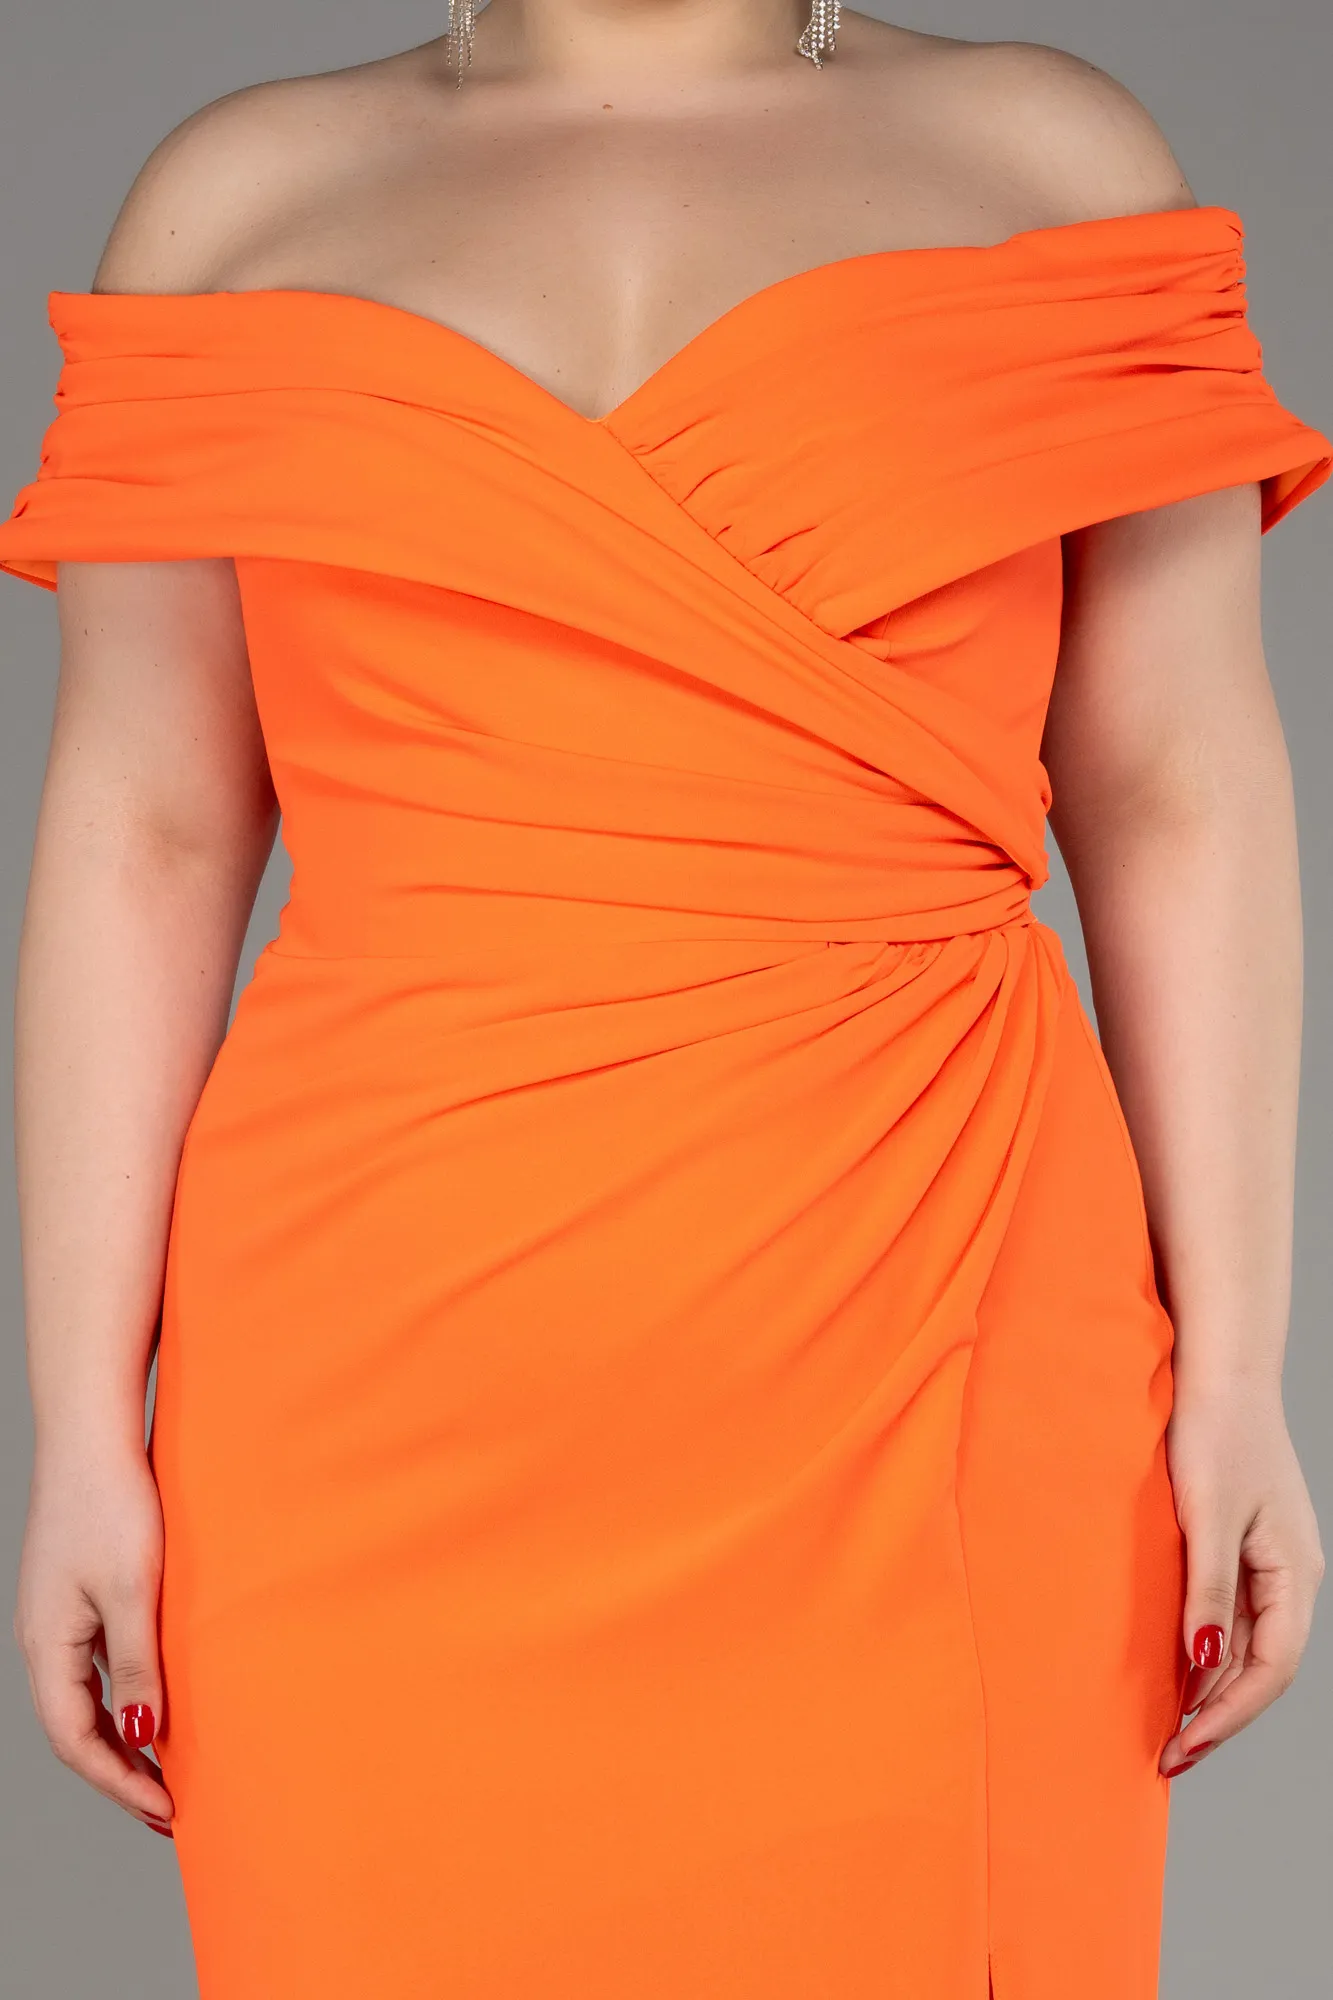 Orange-Long Plus Size Evening Dress ABU3172